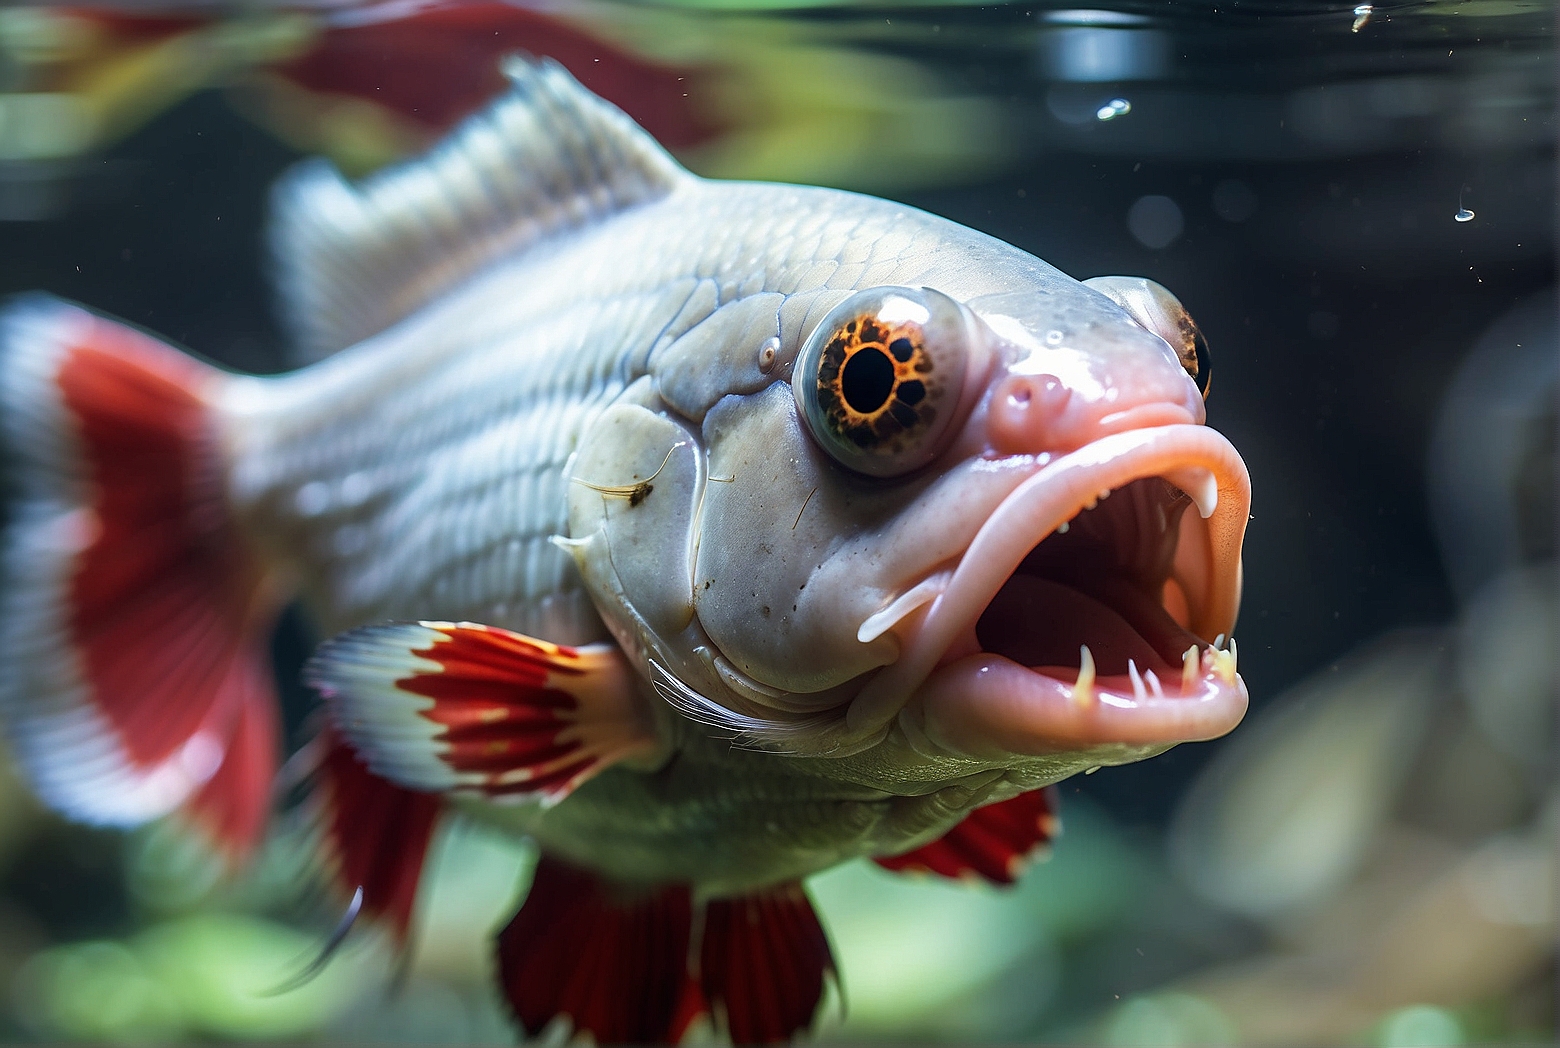 Do Betta Fish Have Teeth?